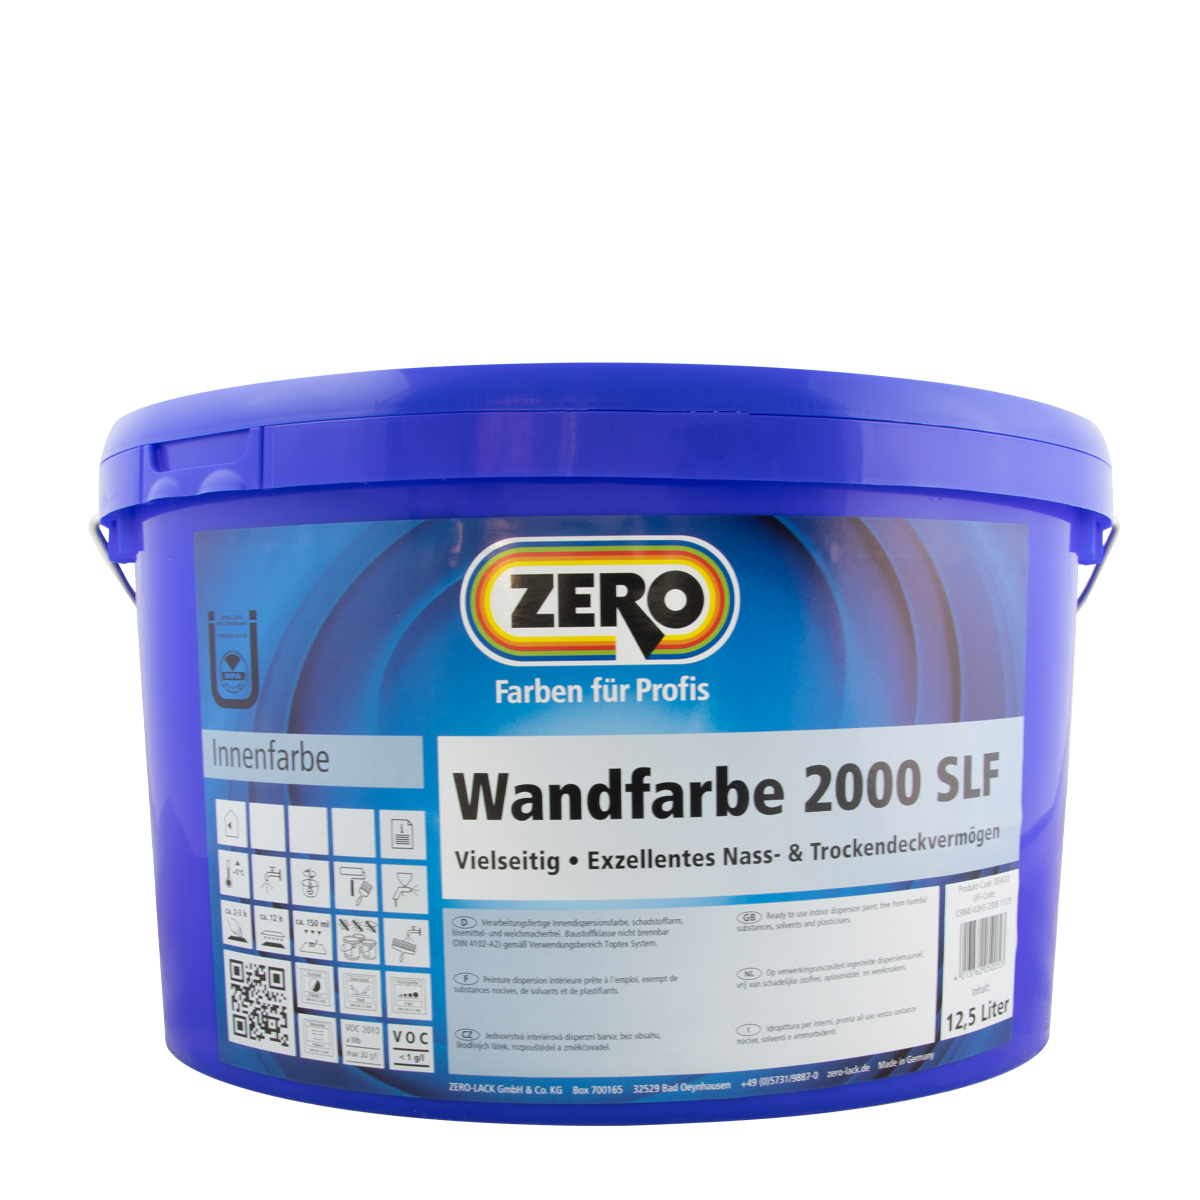 Zero Wandfarbe 2000 SLF 12,5L weiß, Innenfarbe, Wandfarbe